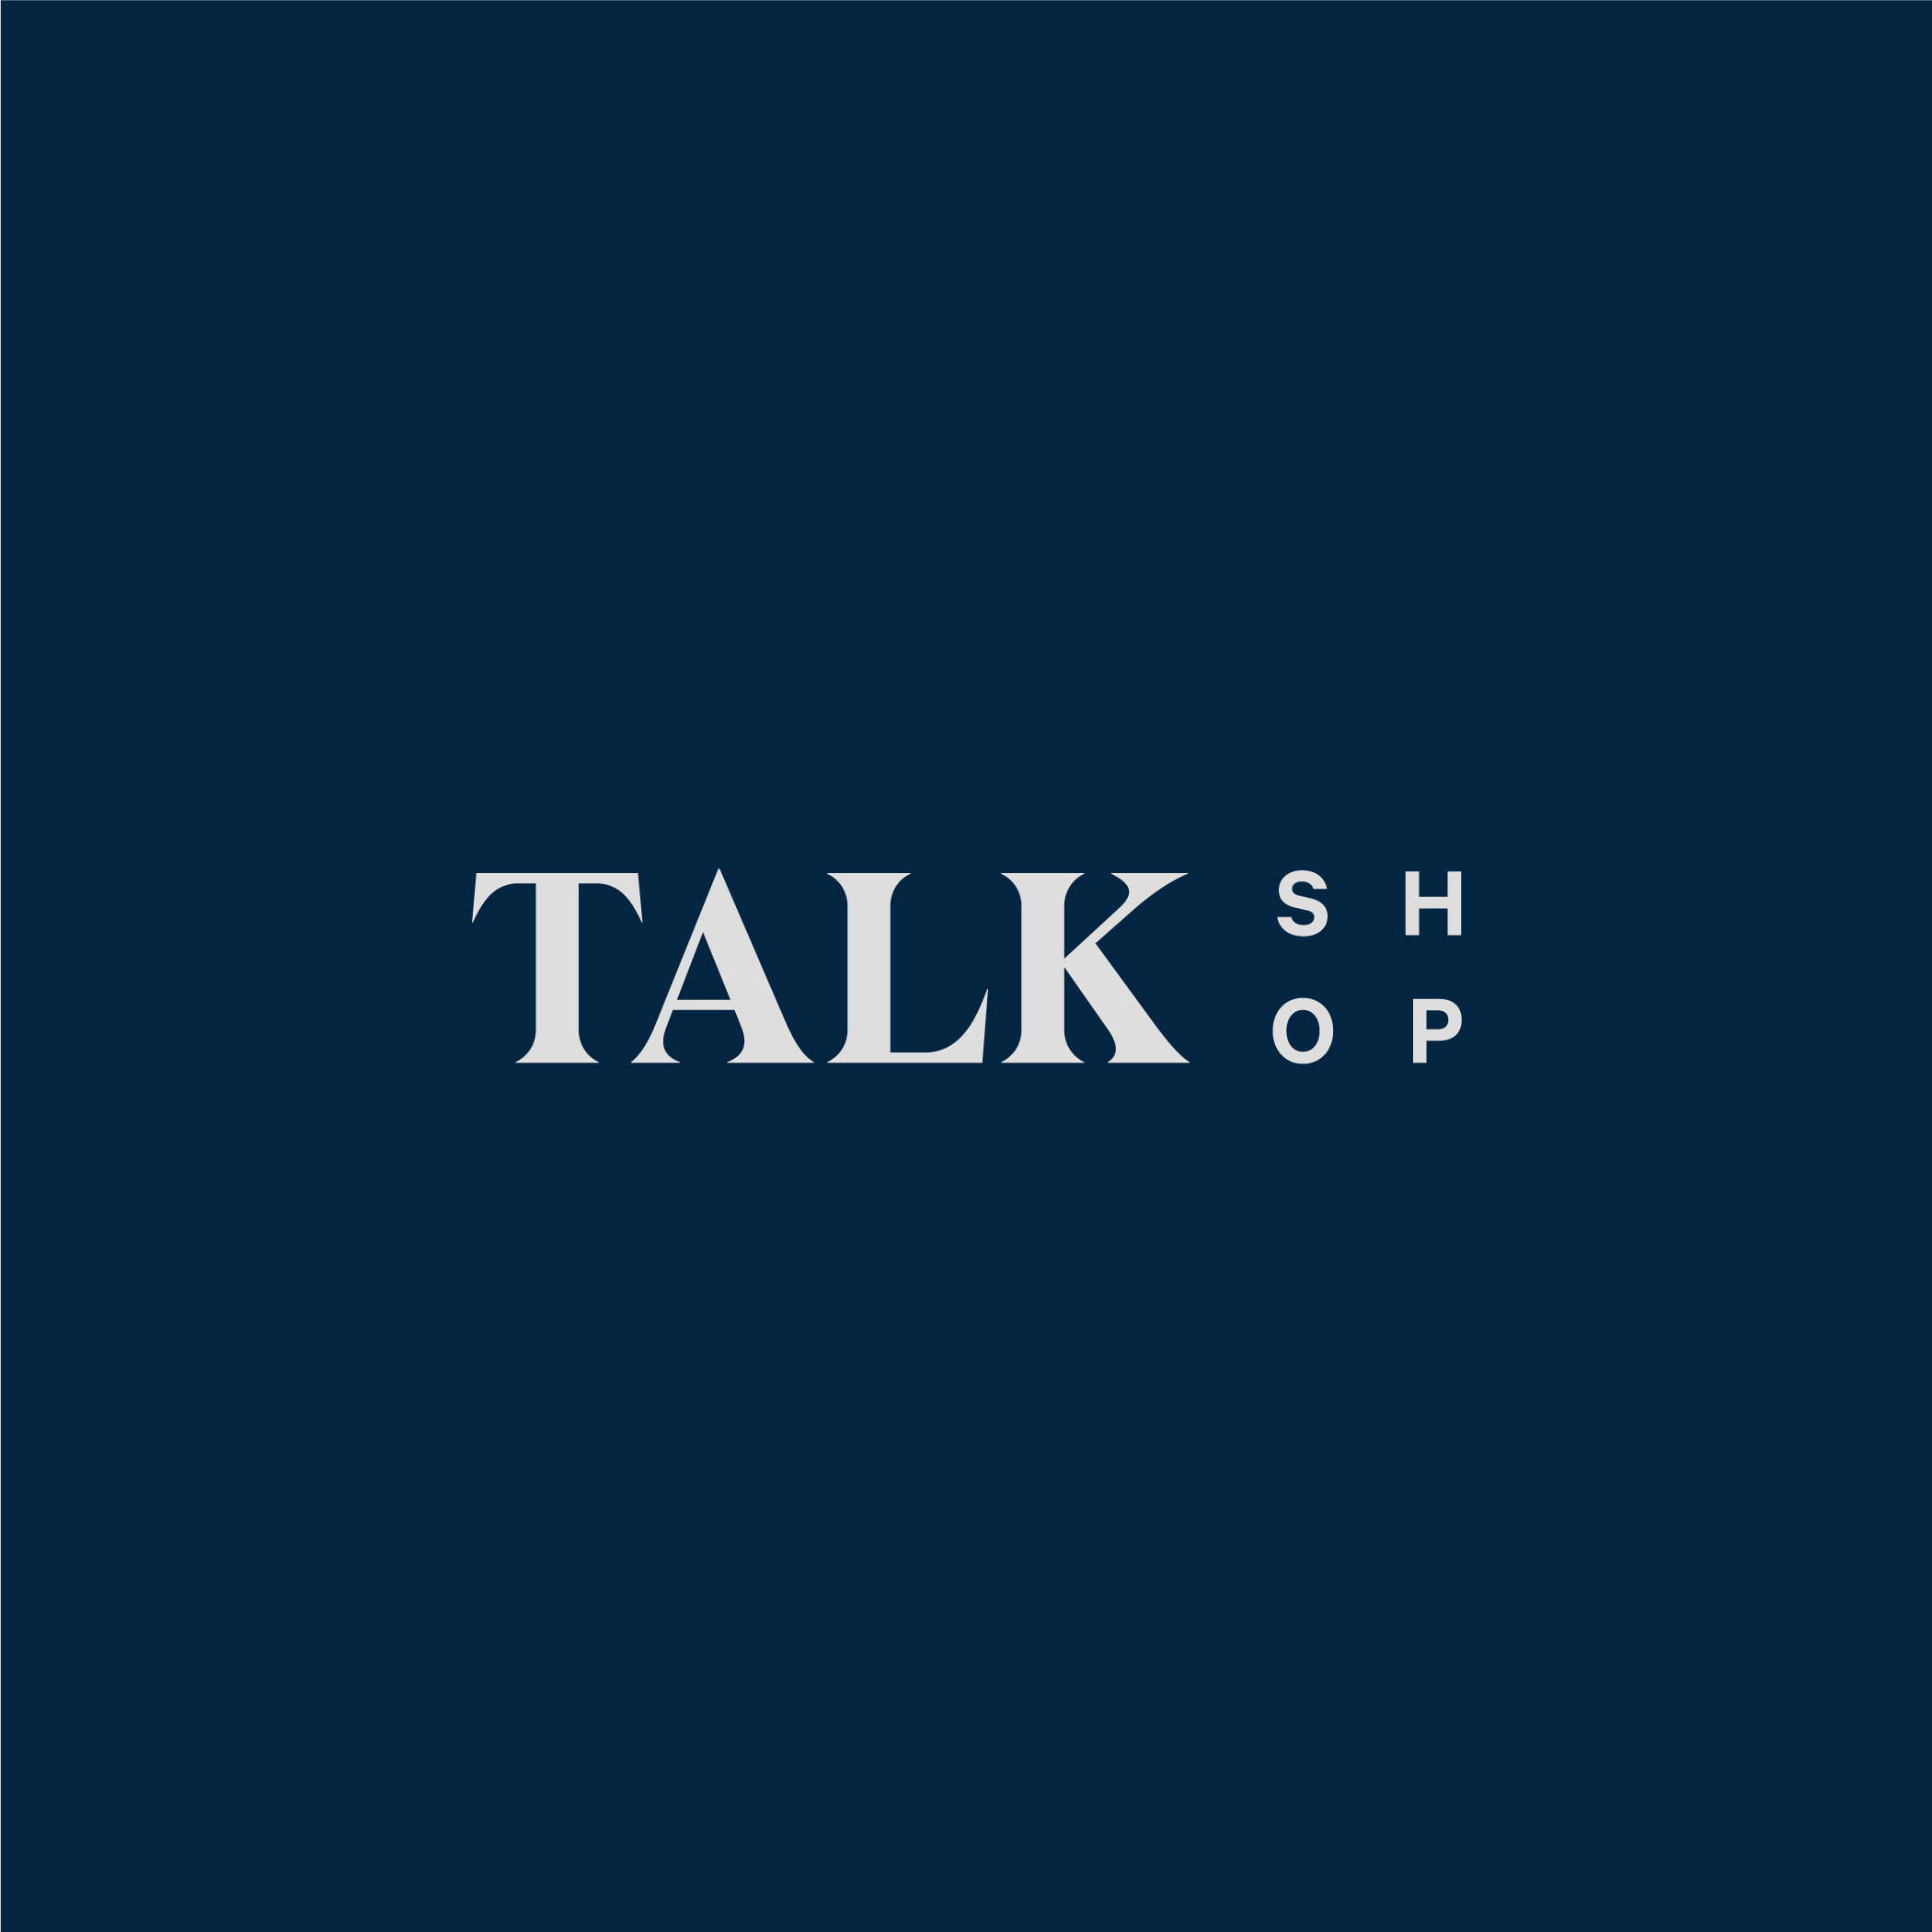 TalkShop_TalkLogo-Stone_MidnightBlue